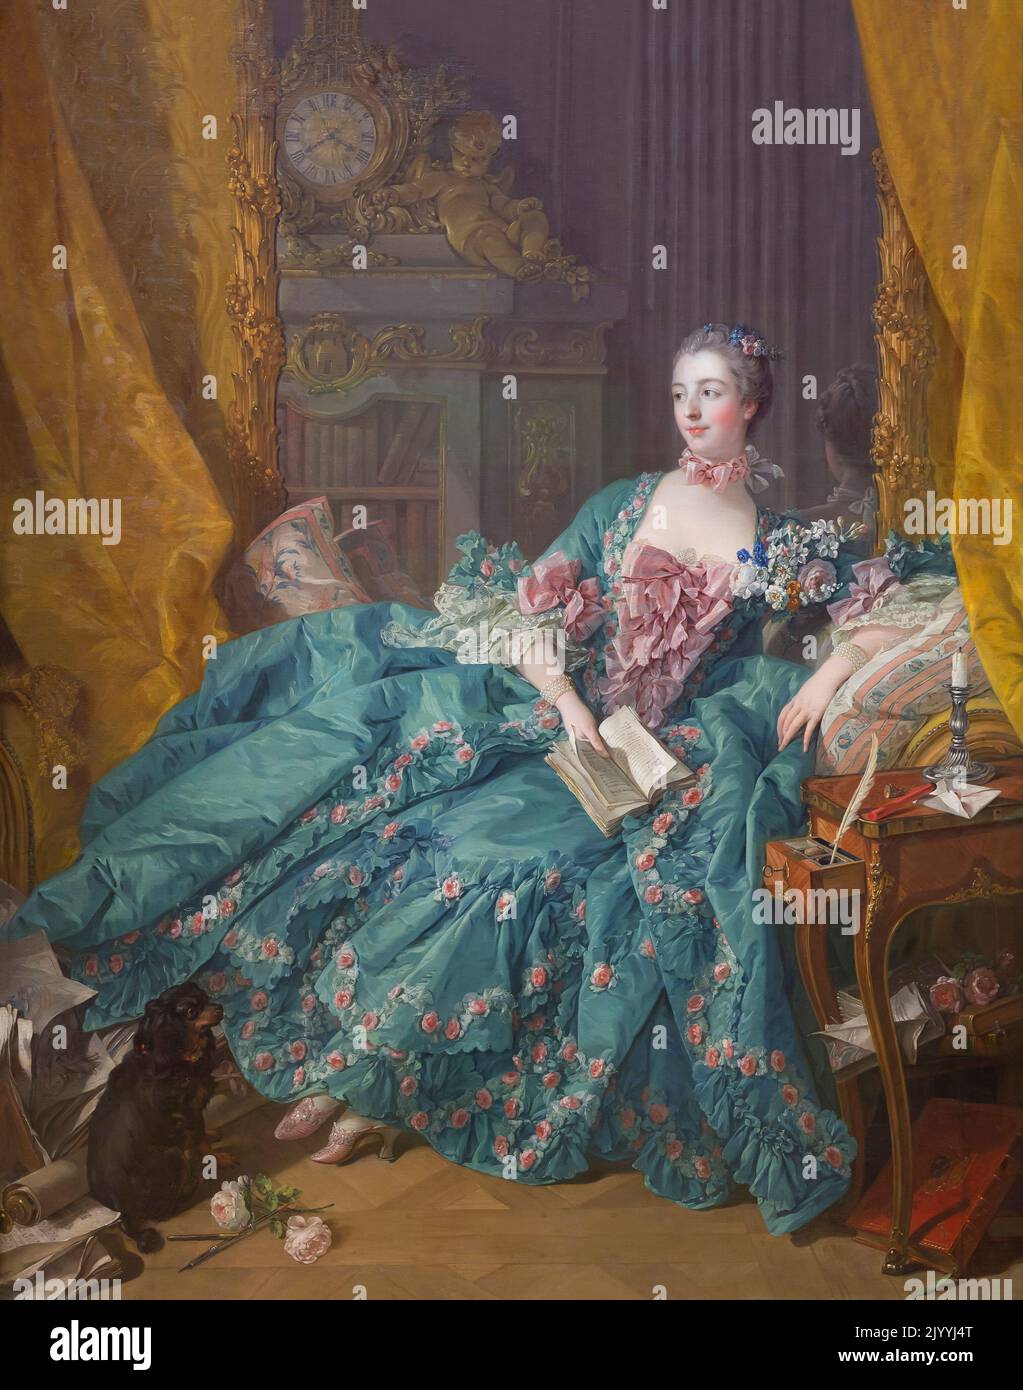 Madame de Pompadour, Francois Boucher, 1756, Alte Pinakothek, Munich, Germany, Europe Stock Photo